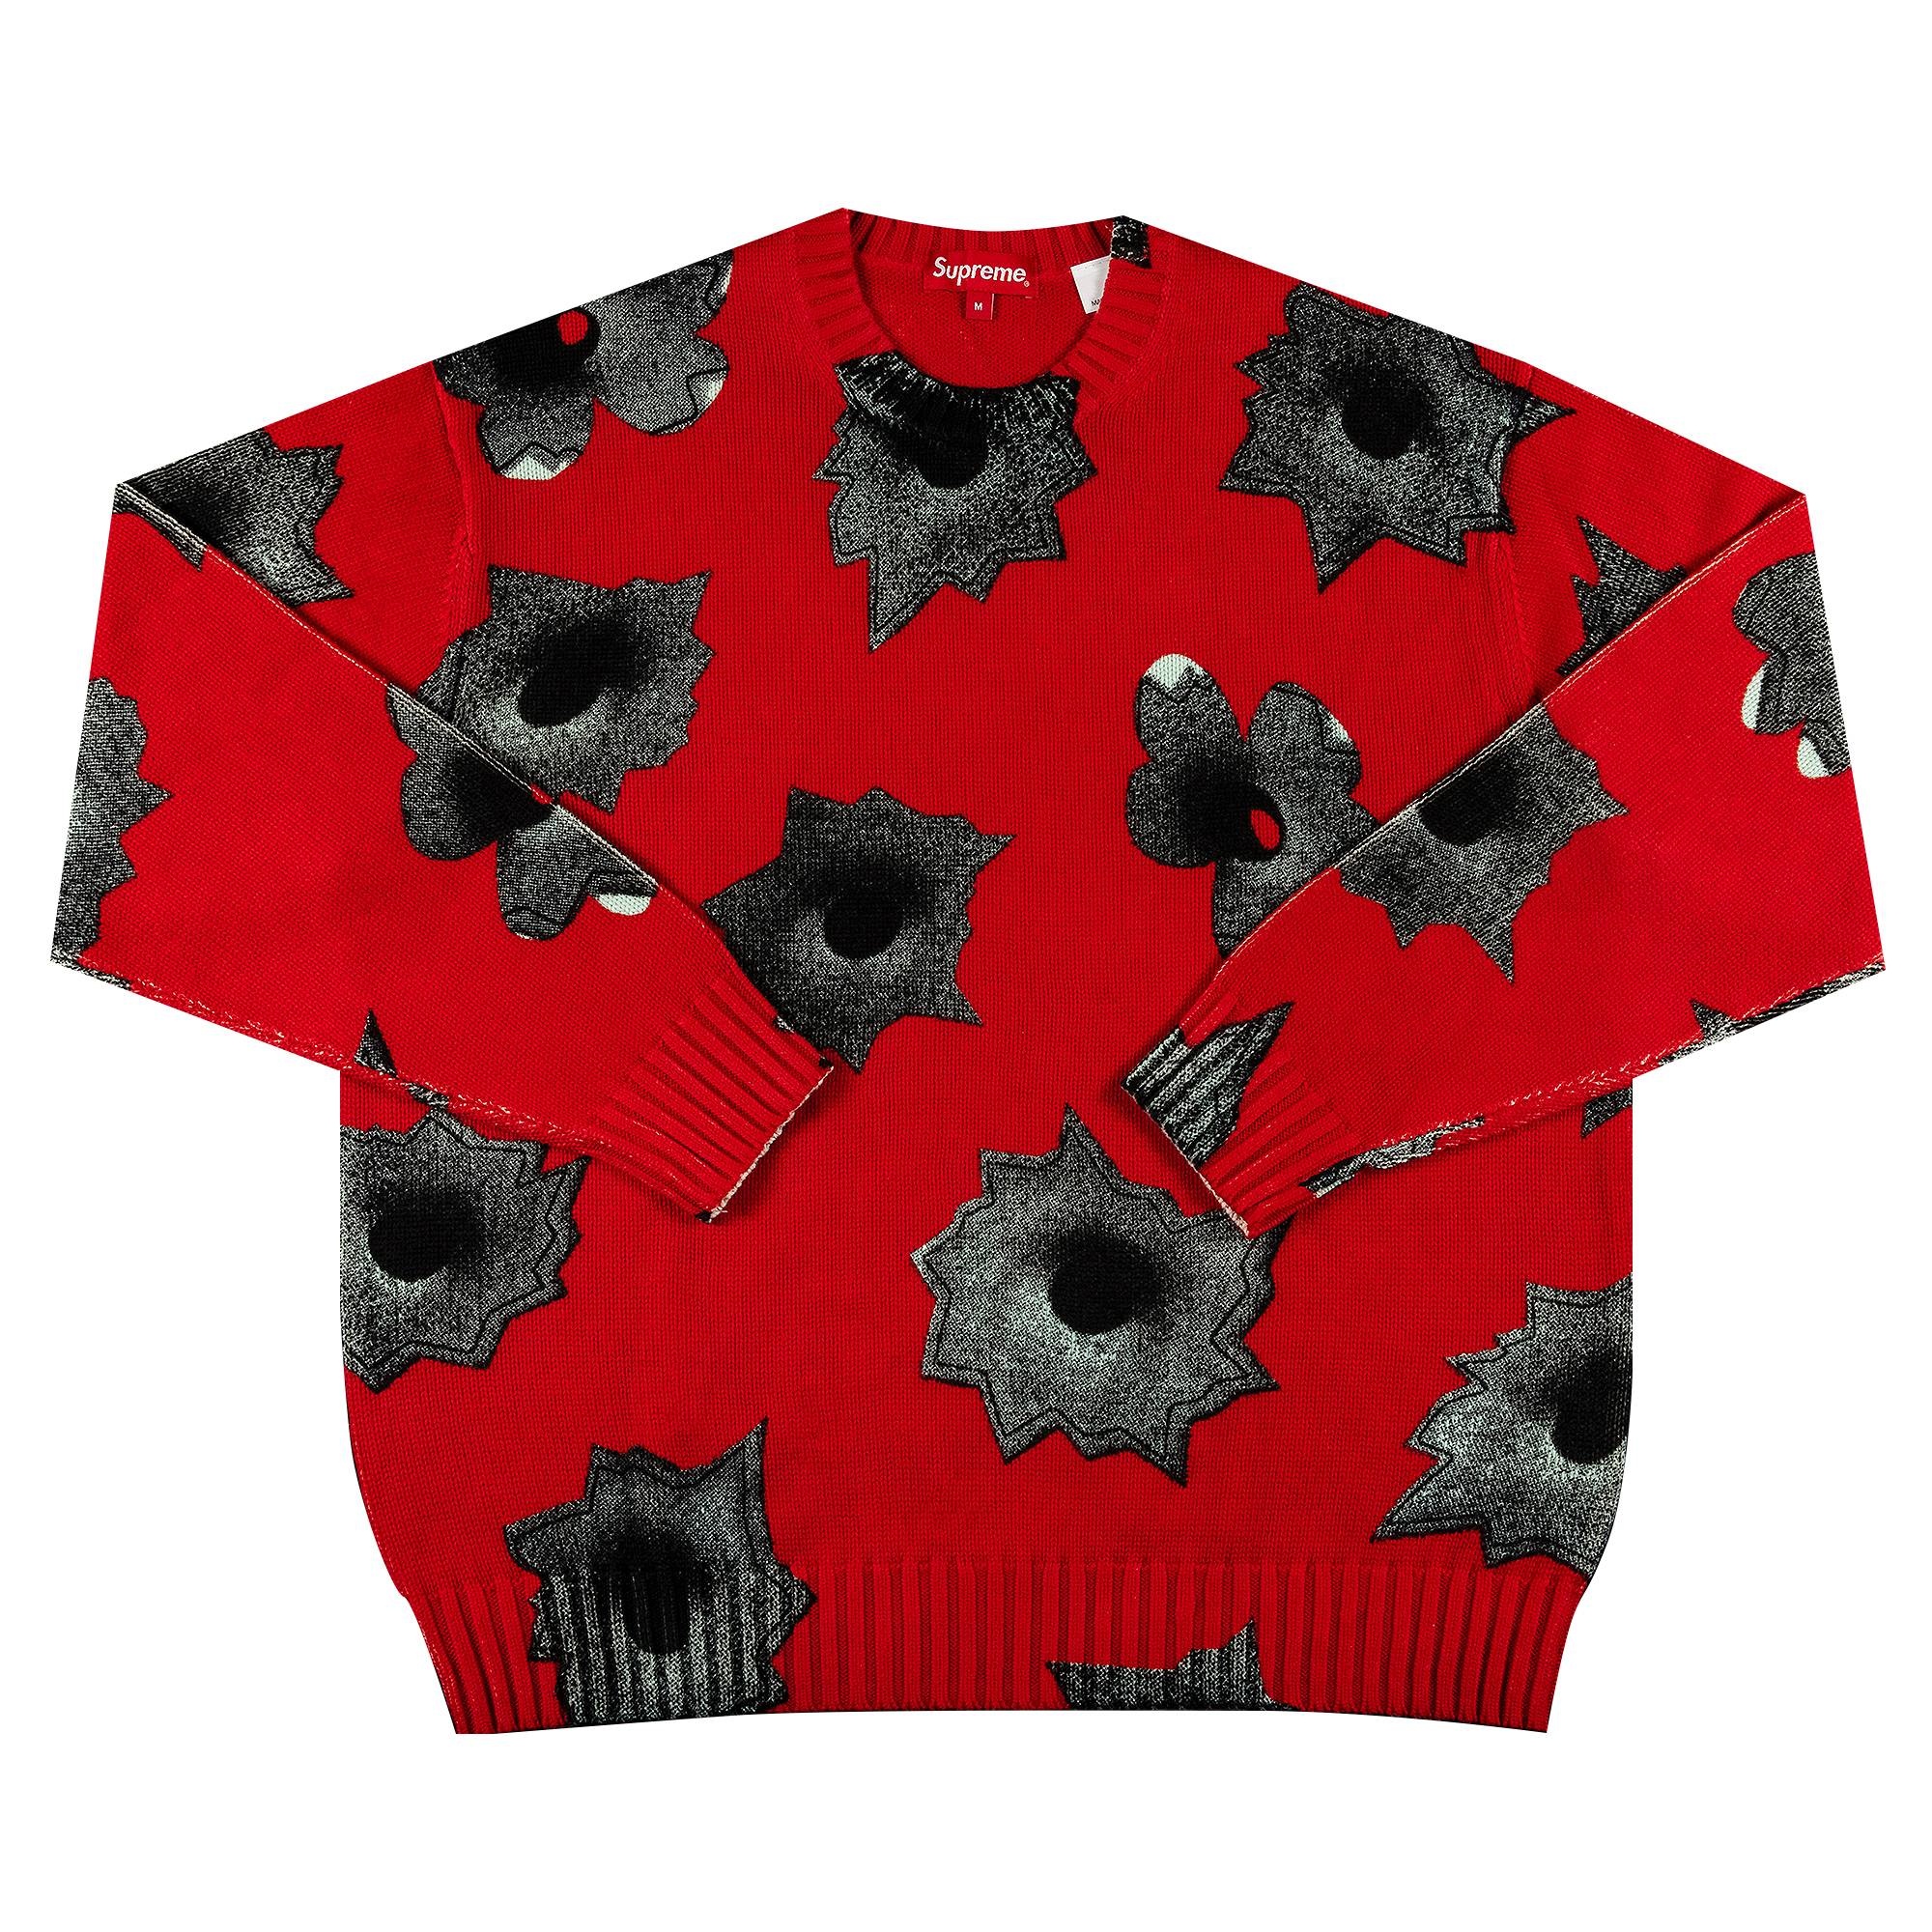 Supreme Supreme x Nate Lowman Sweater 'Red' | REVERSIBLE